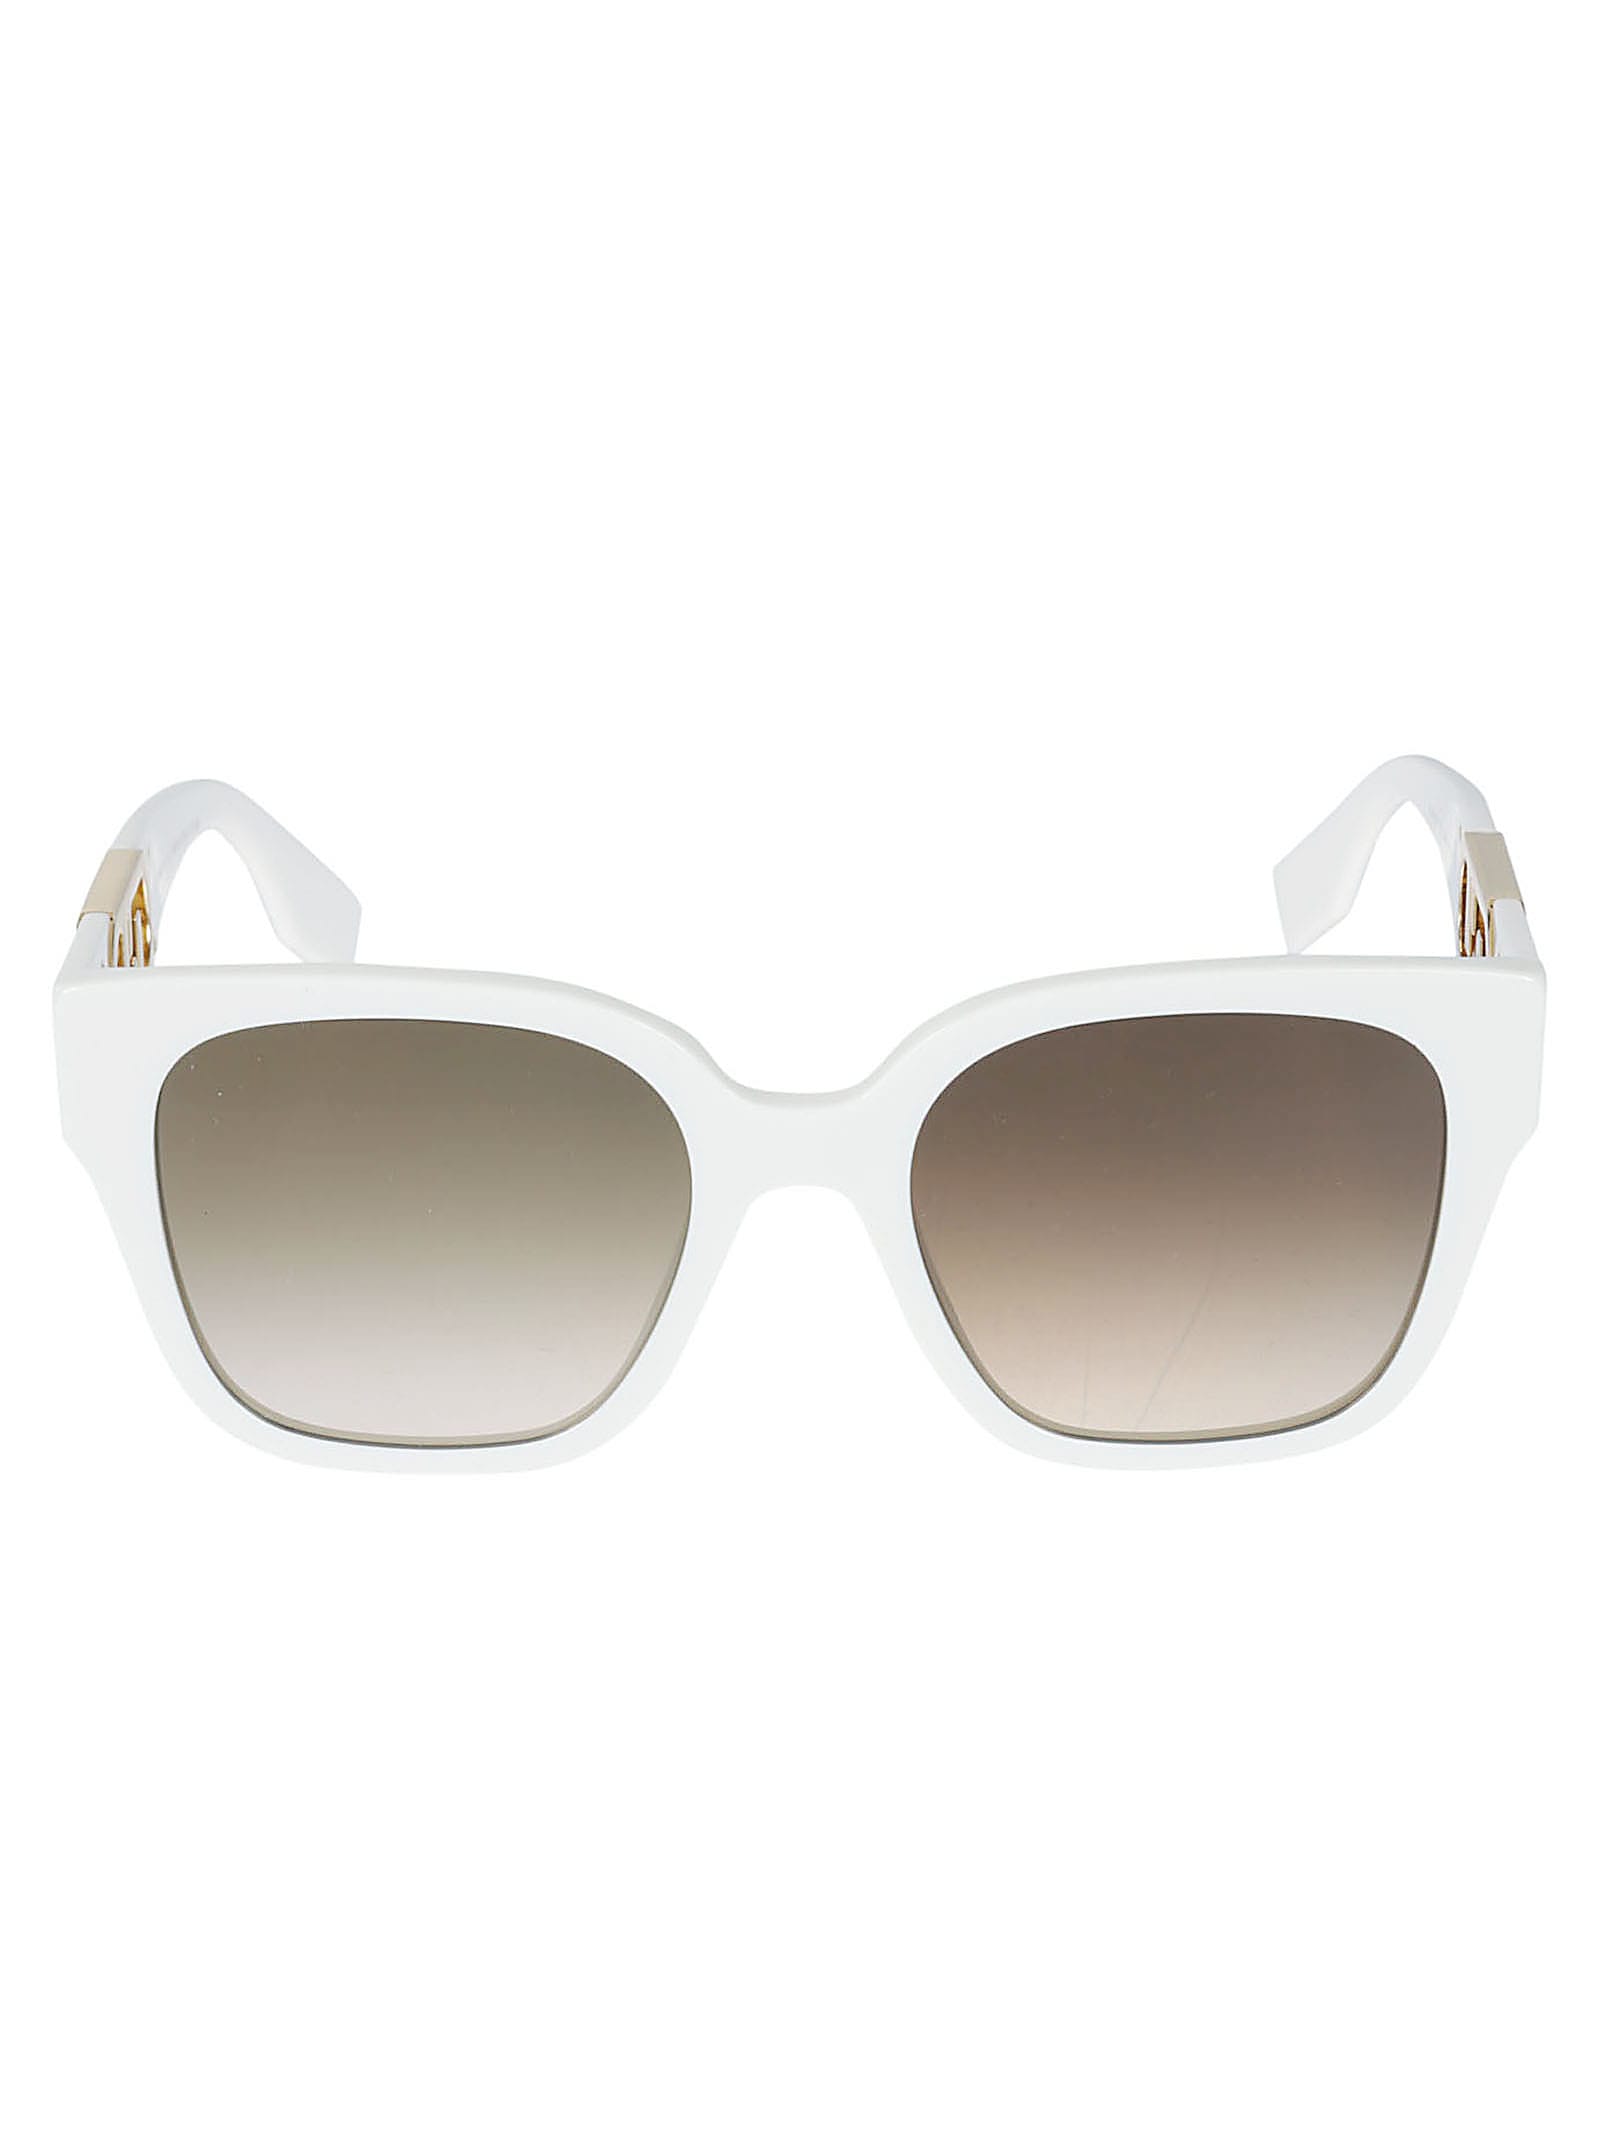 Fendi Eyewear Retro Square Sunglasses